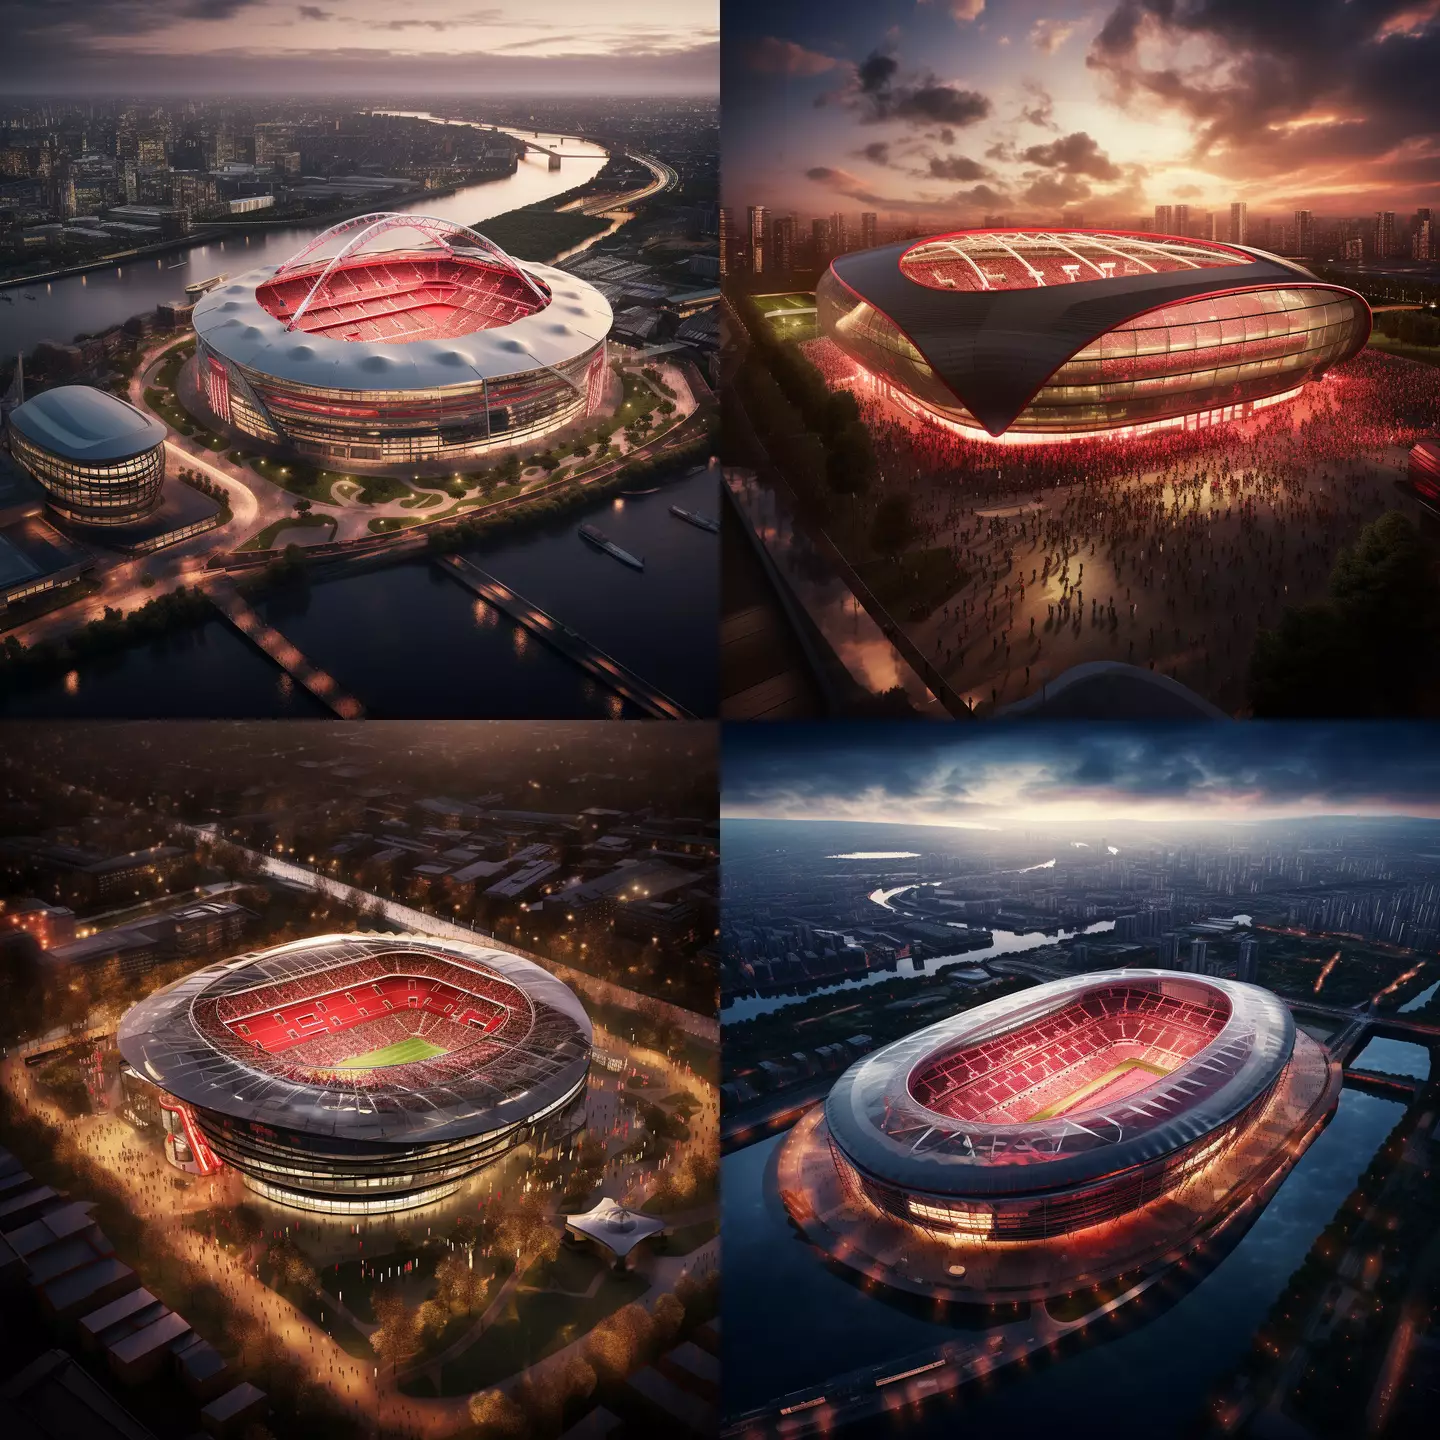 Arsenal's home stadium, Emirates Stadium